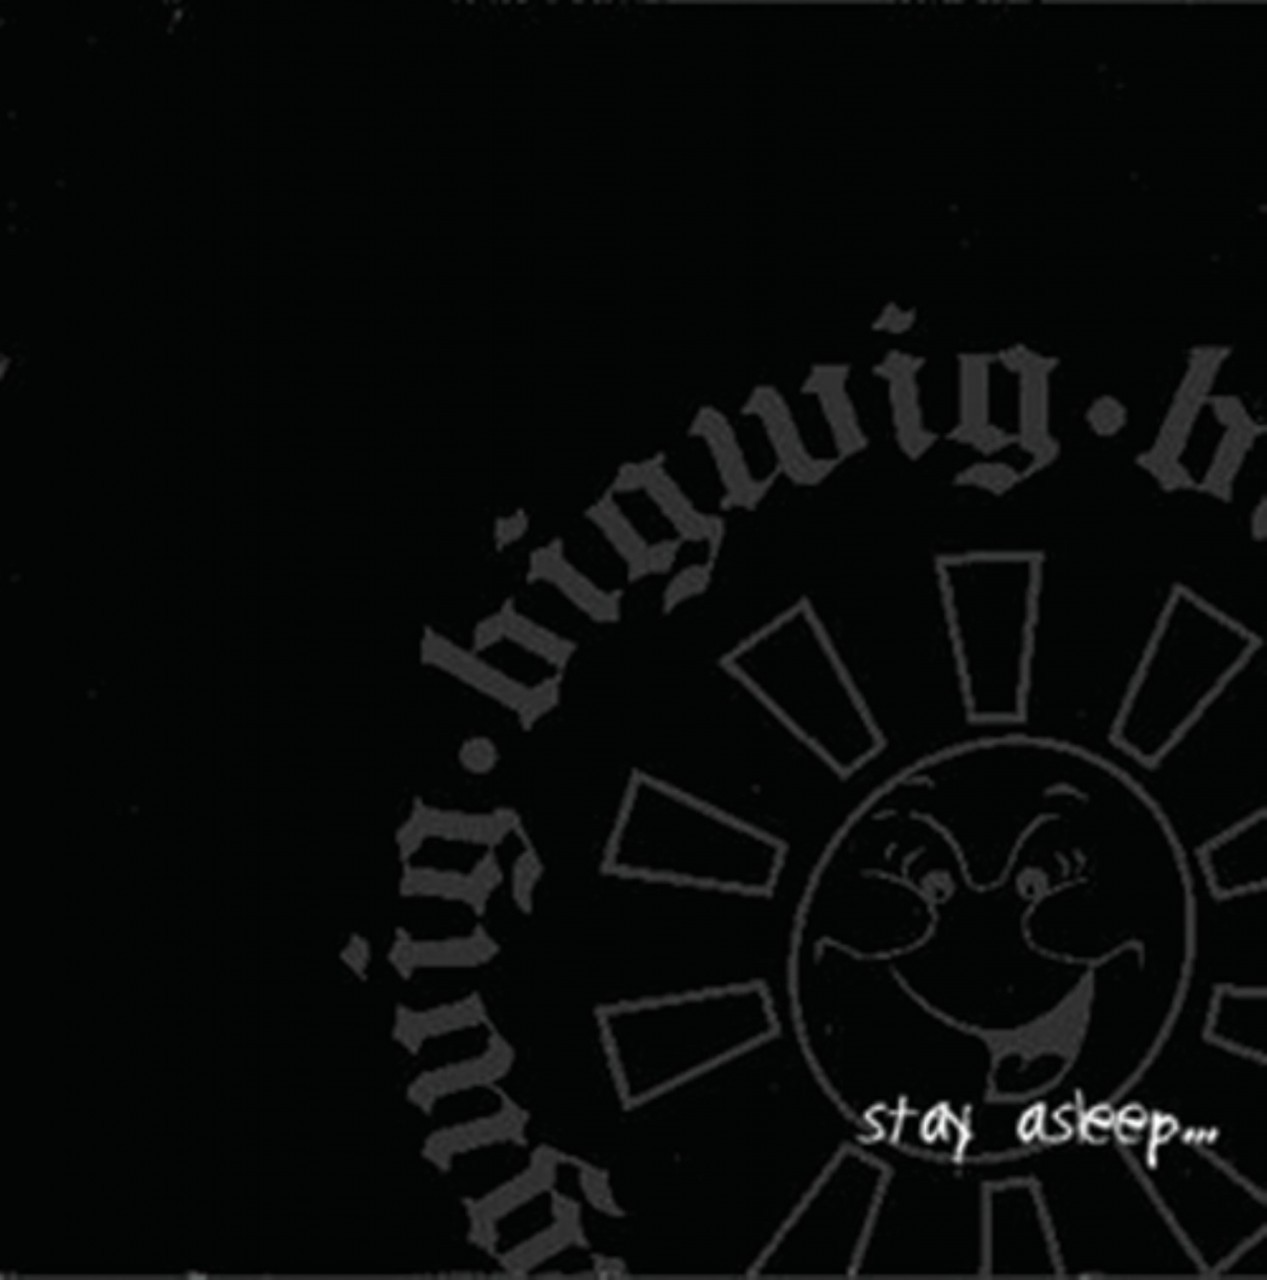 Bigwig - Stay Asleep LP